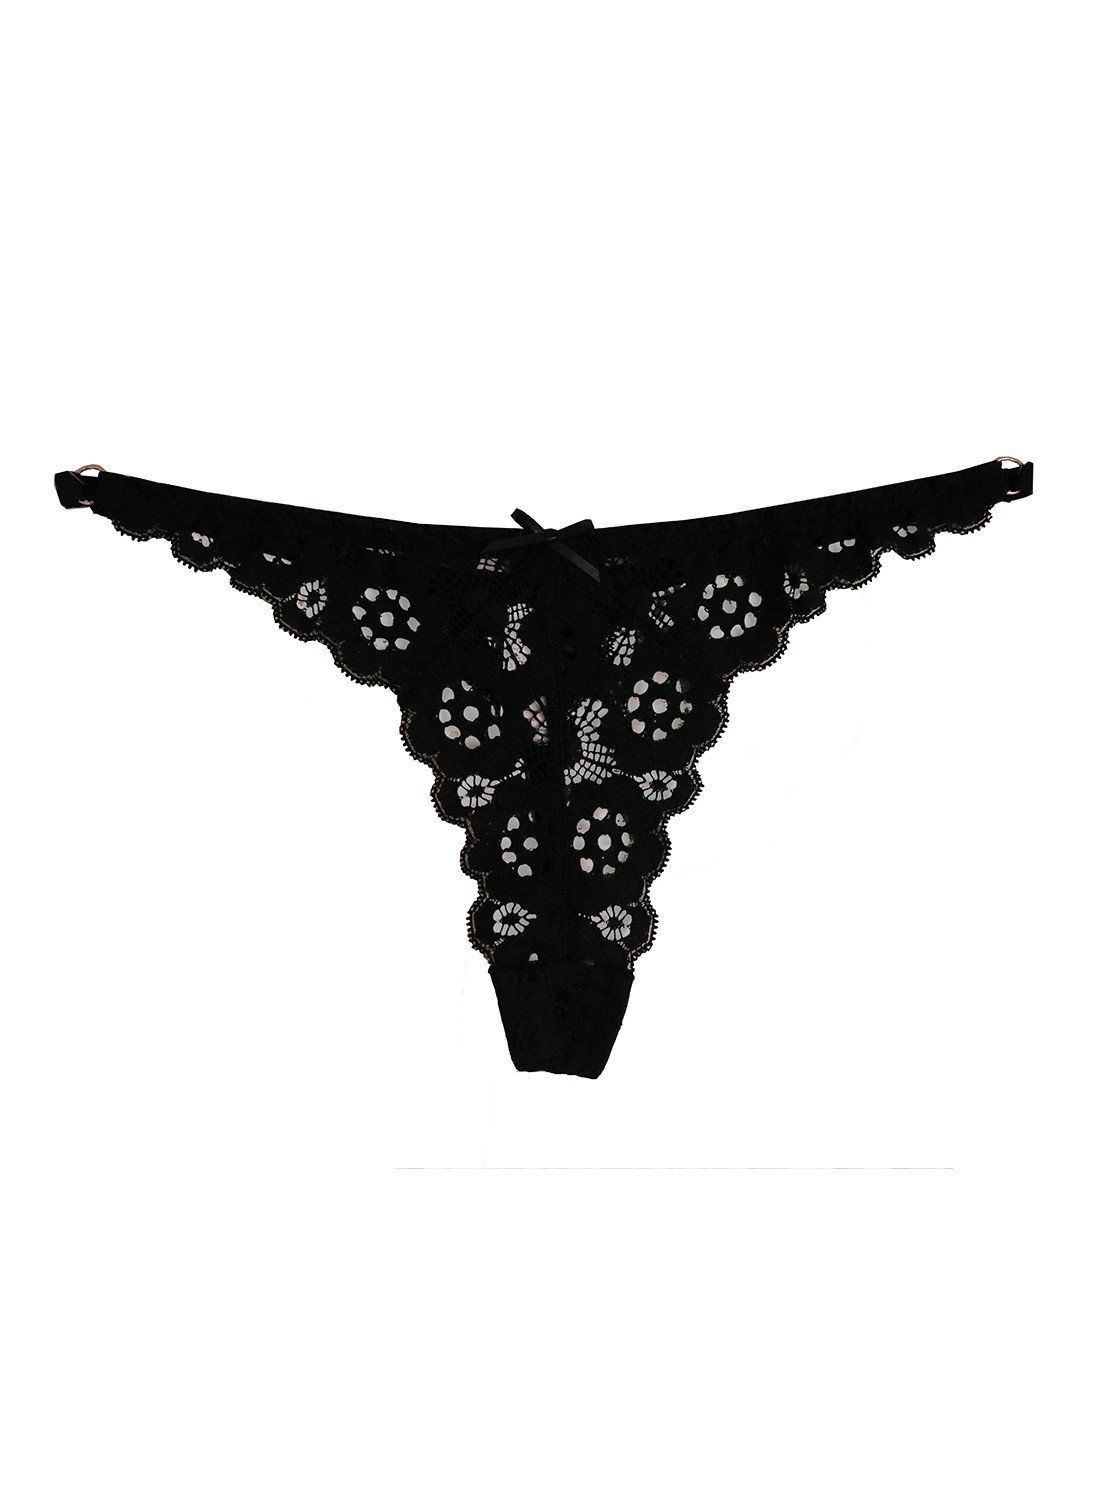 UK Women's Leather Panties G-string High Cut Underwear Lace Knickers Underpants